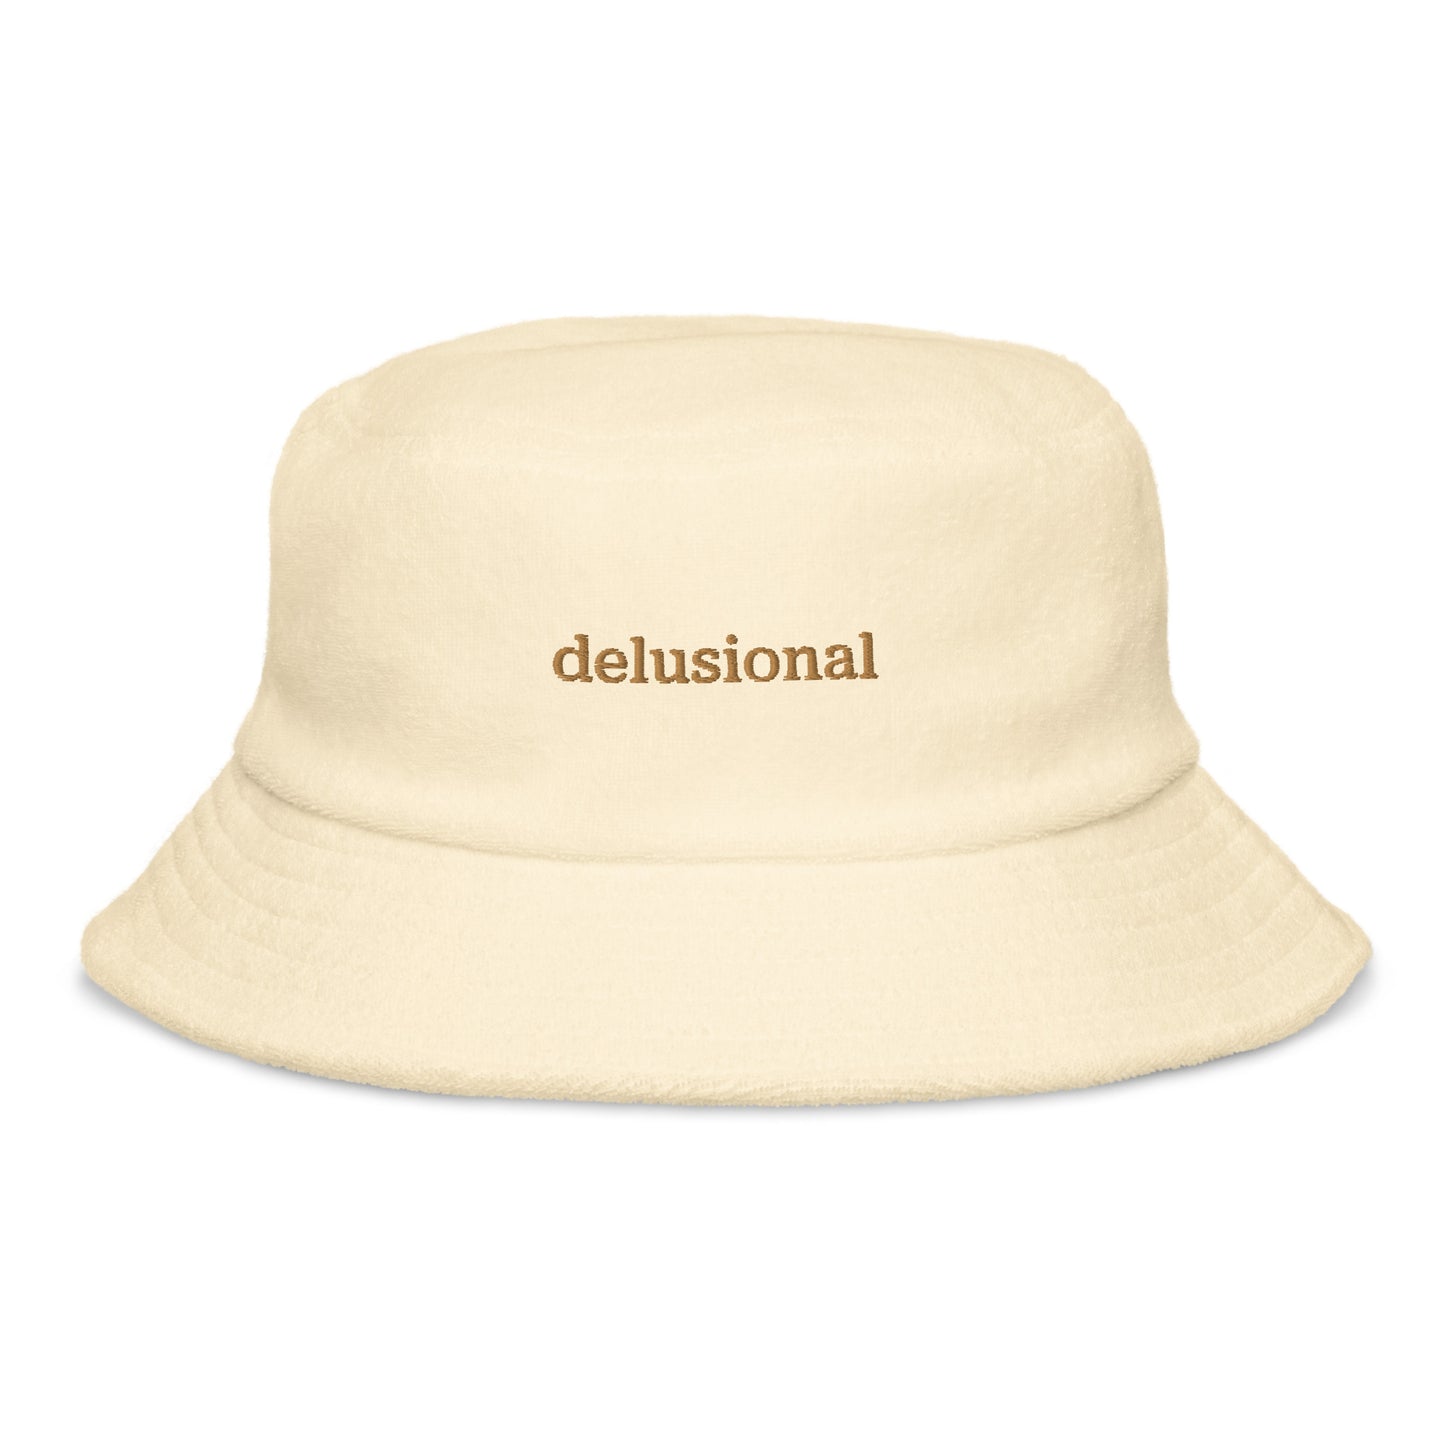 delusional bucket hat